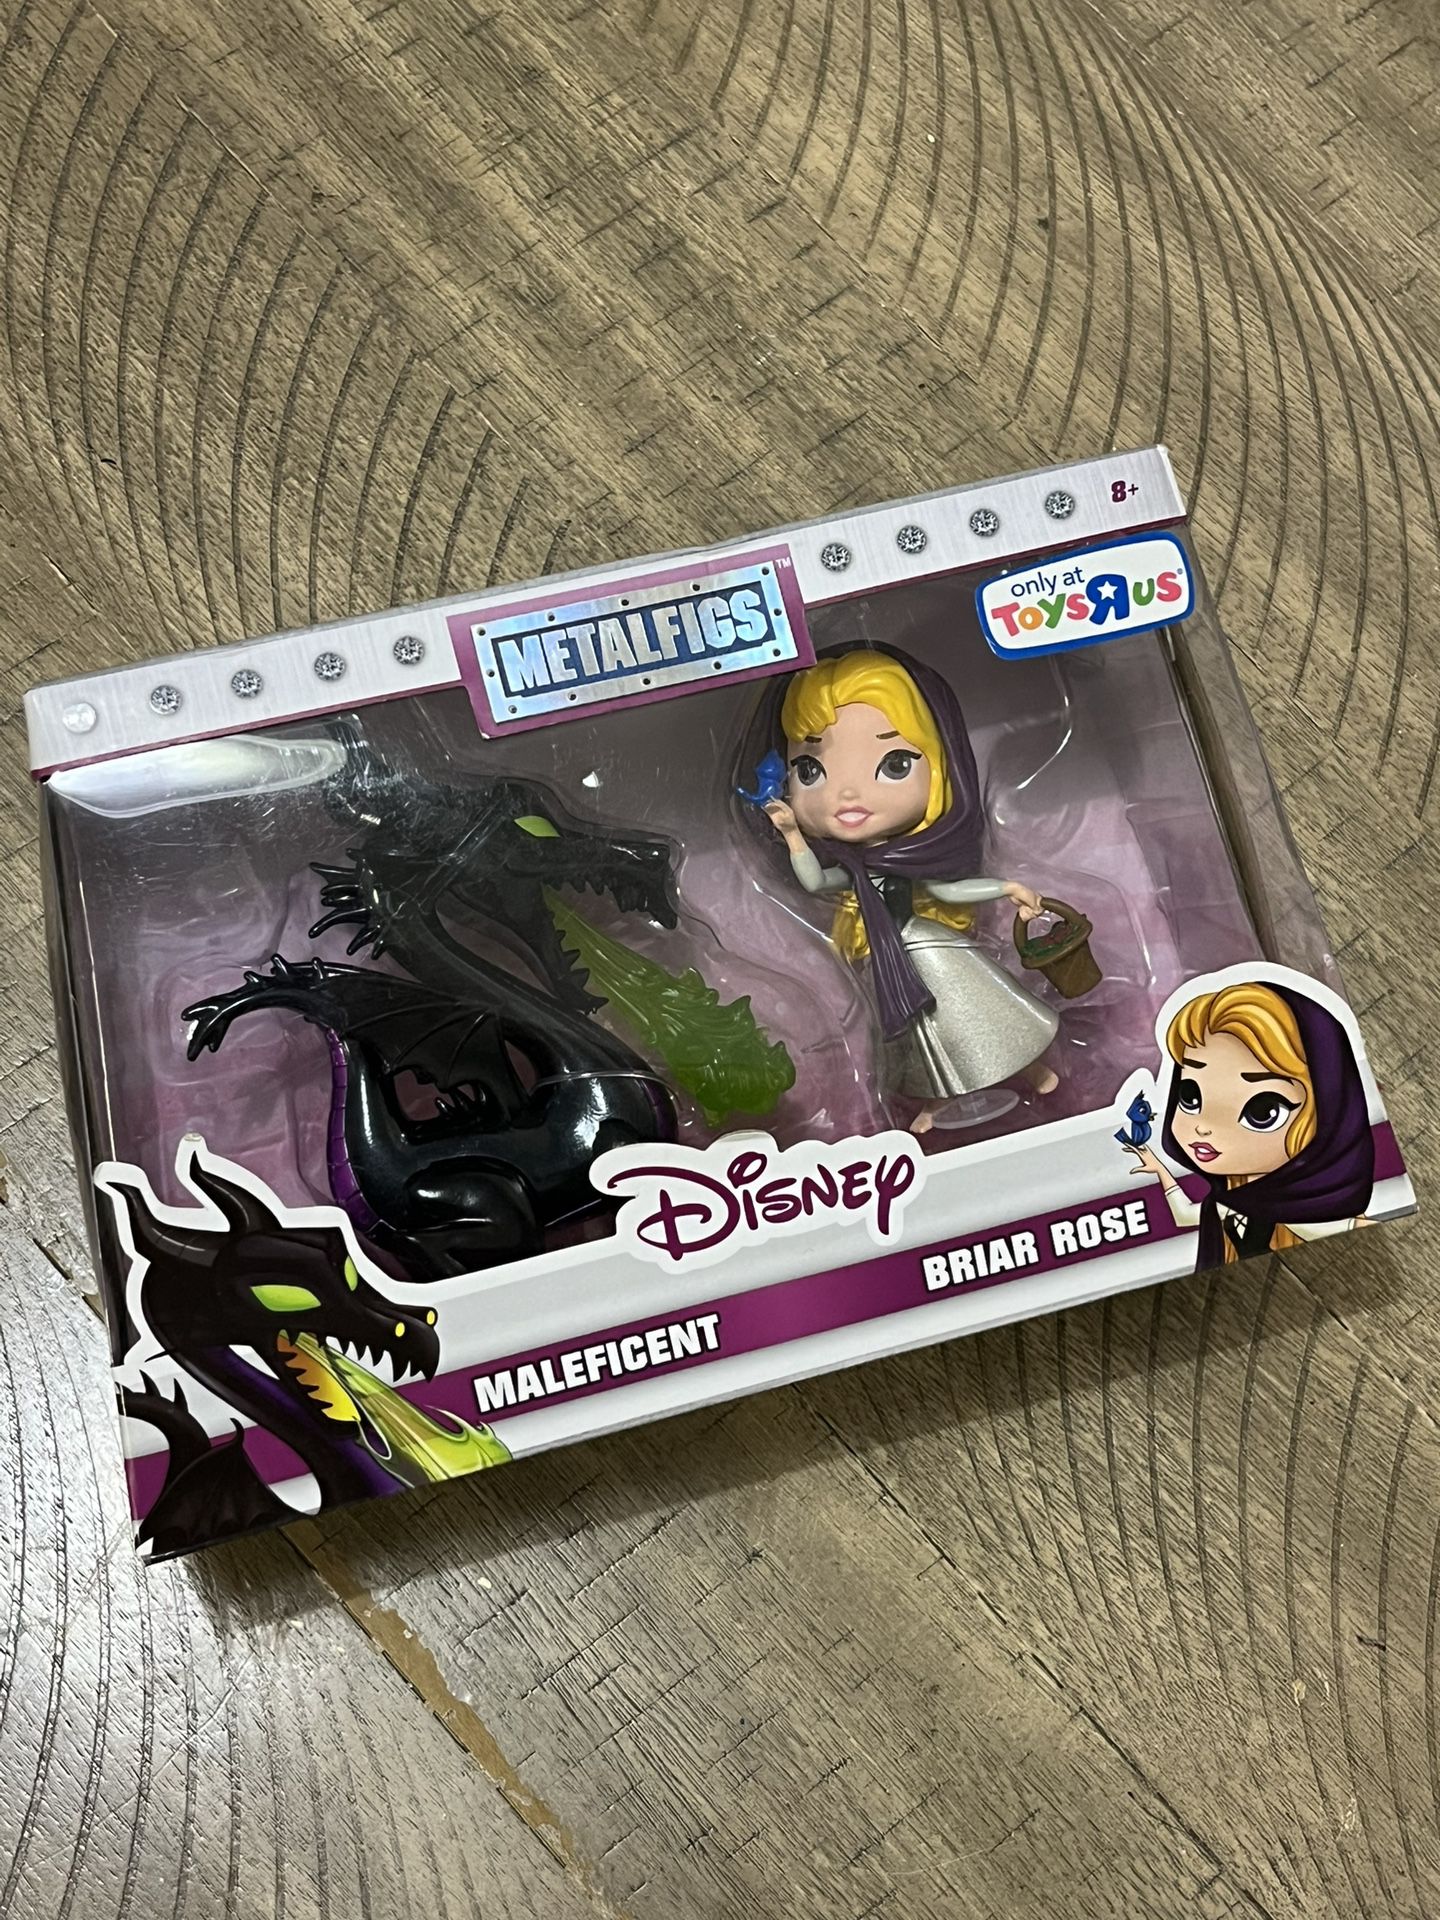 Disney Metalfigs Sleeping Beauty Briar Rose and Maleficent dragon set 